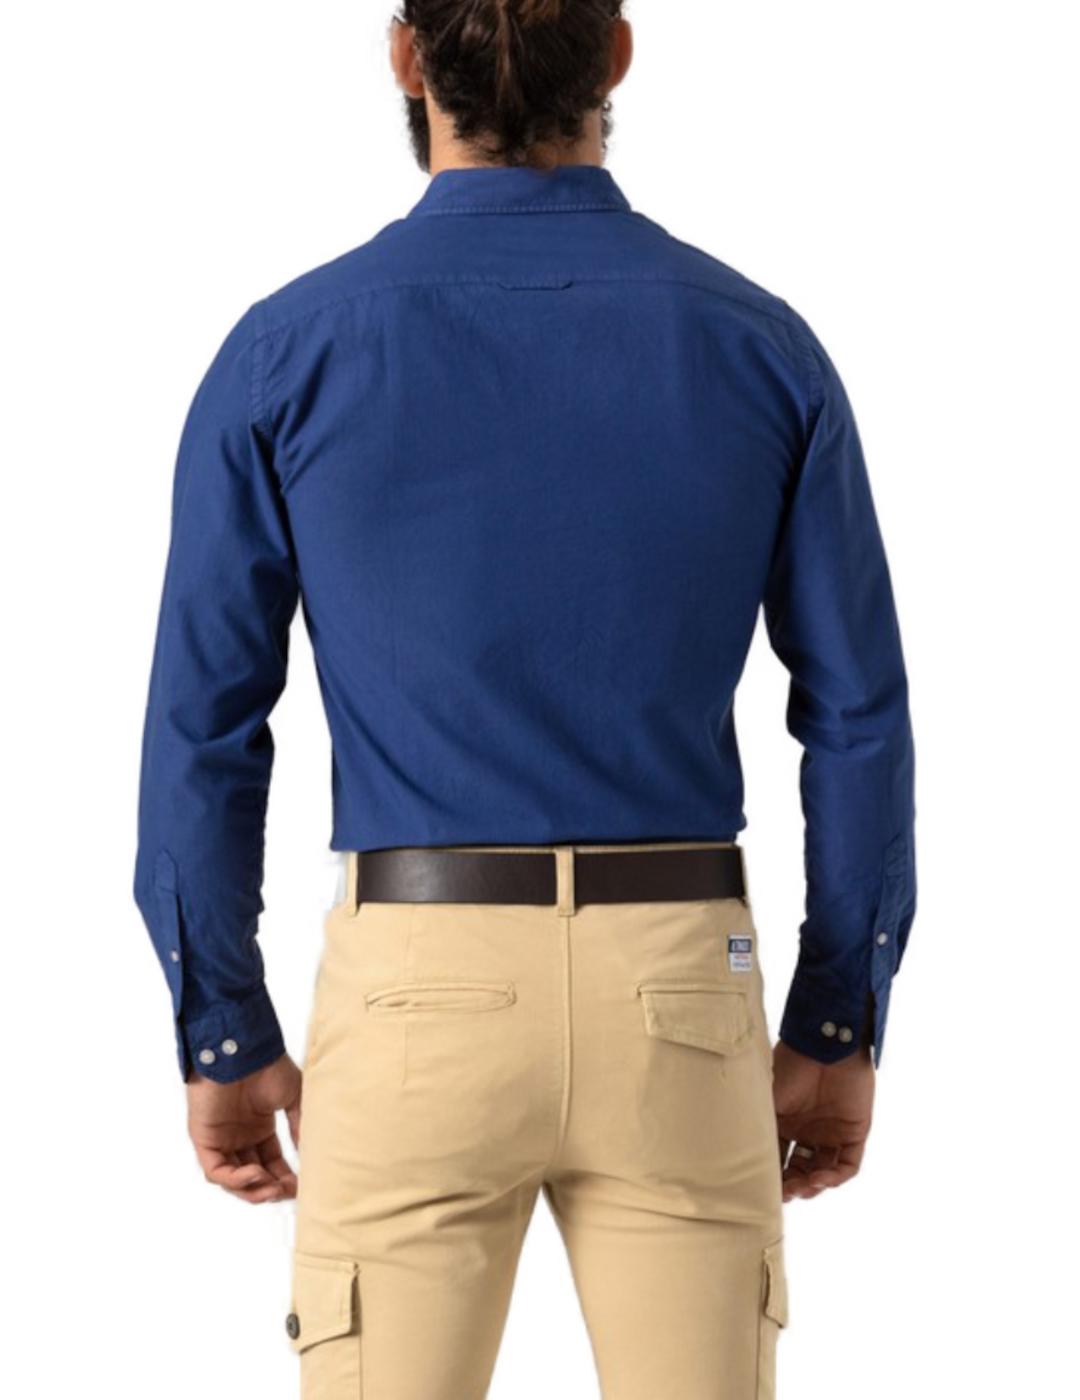 Camisa Altonadock azul marino para hombre-z